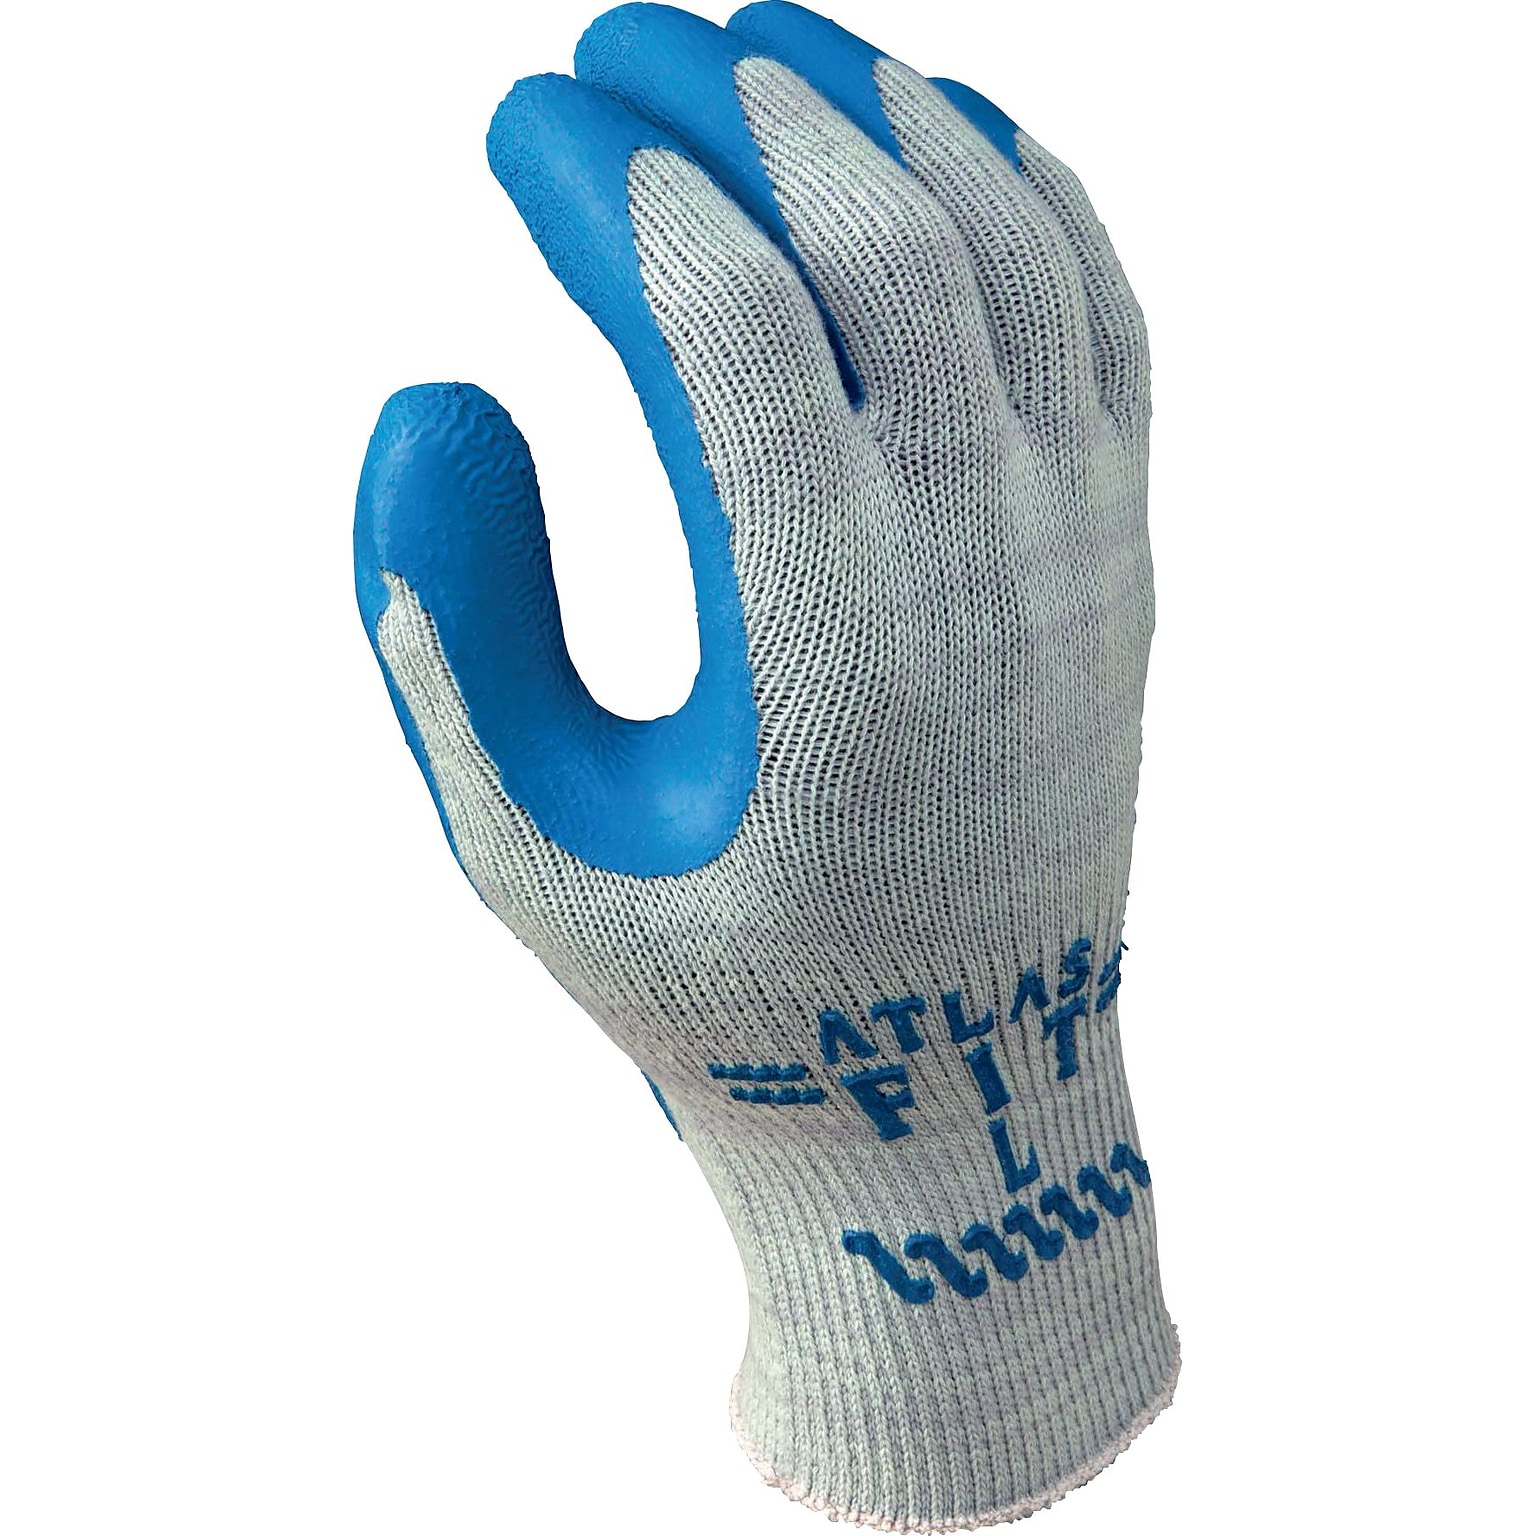 Showa Best® Glove ATLAS® Fit® 300 Rubber Coated General Purpose Gloves, Medium